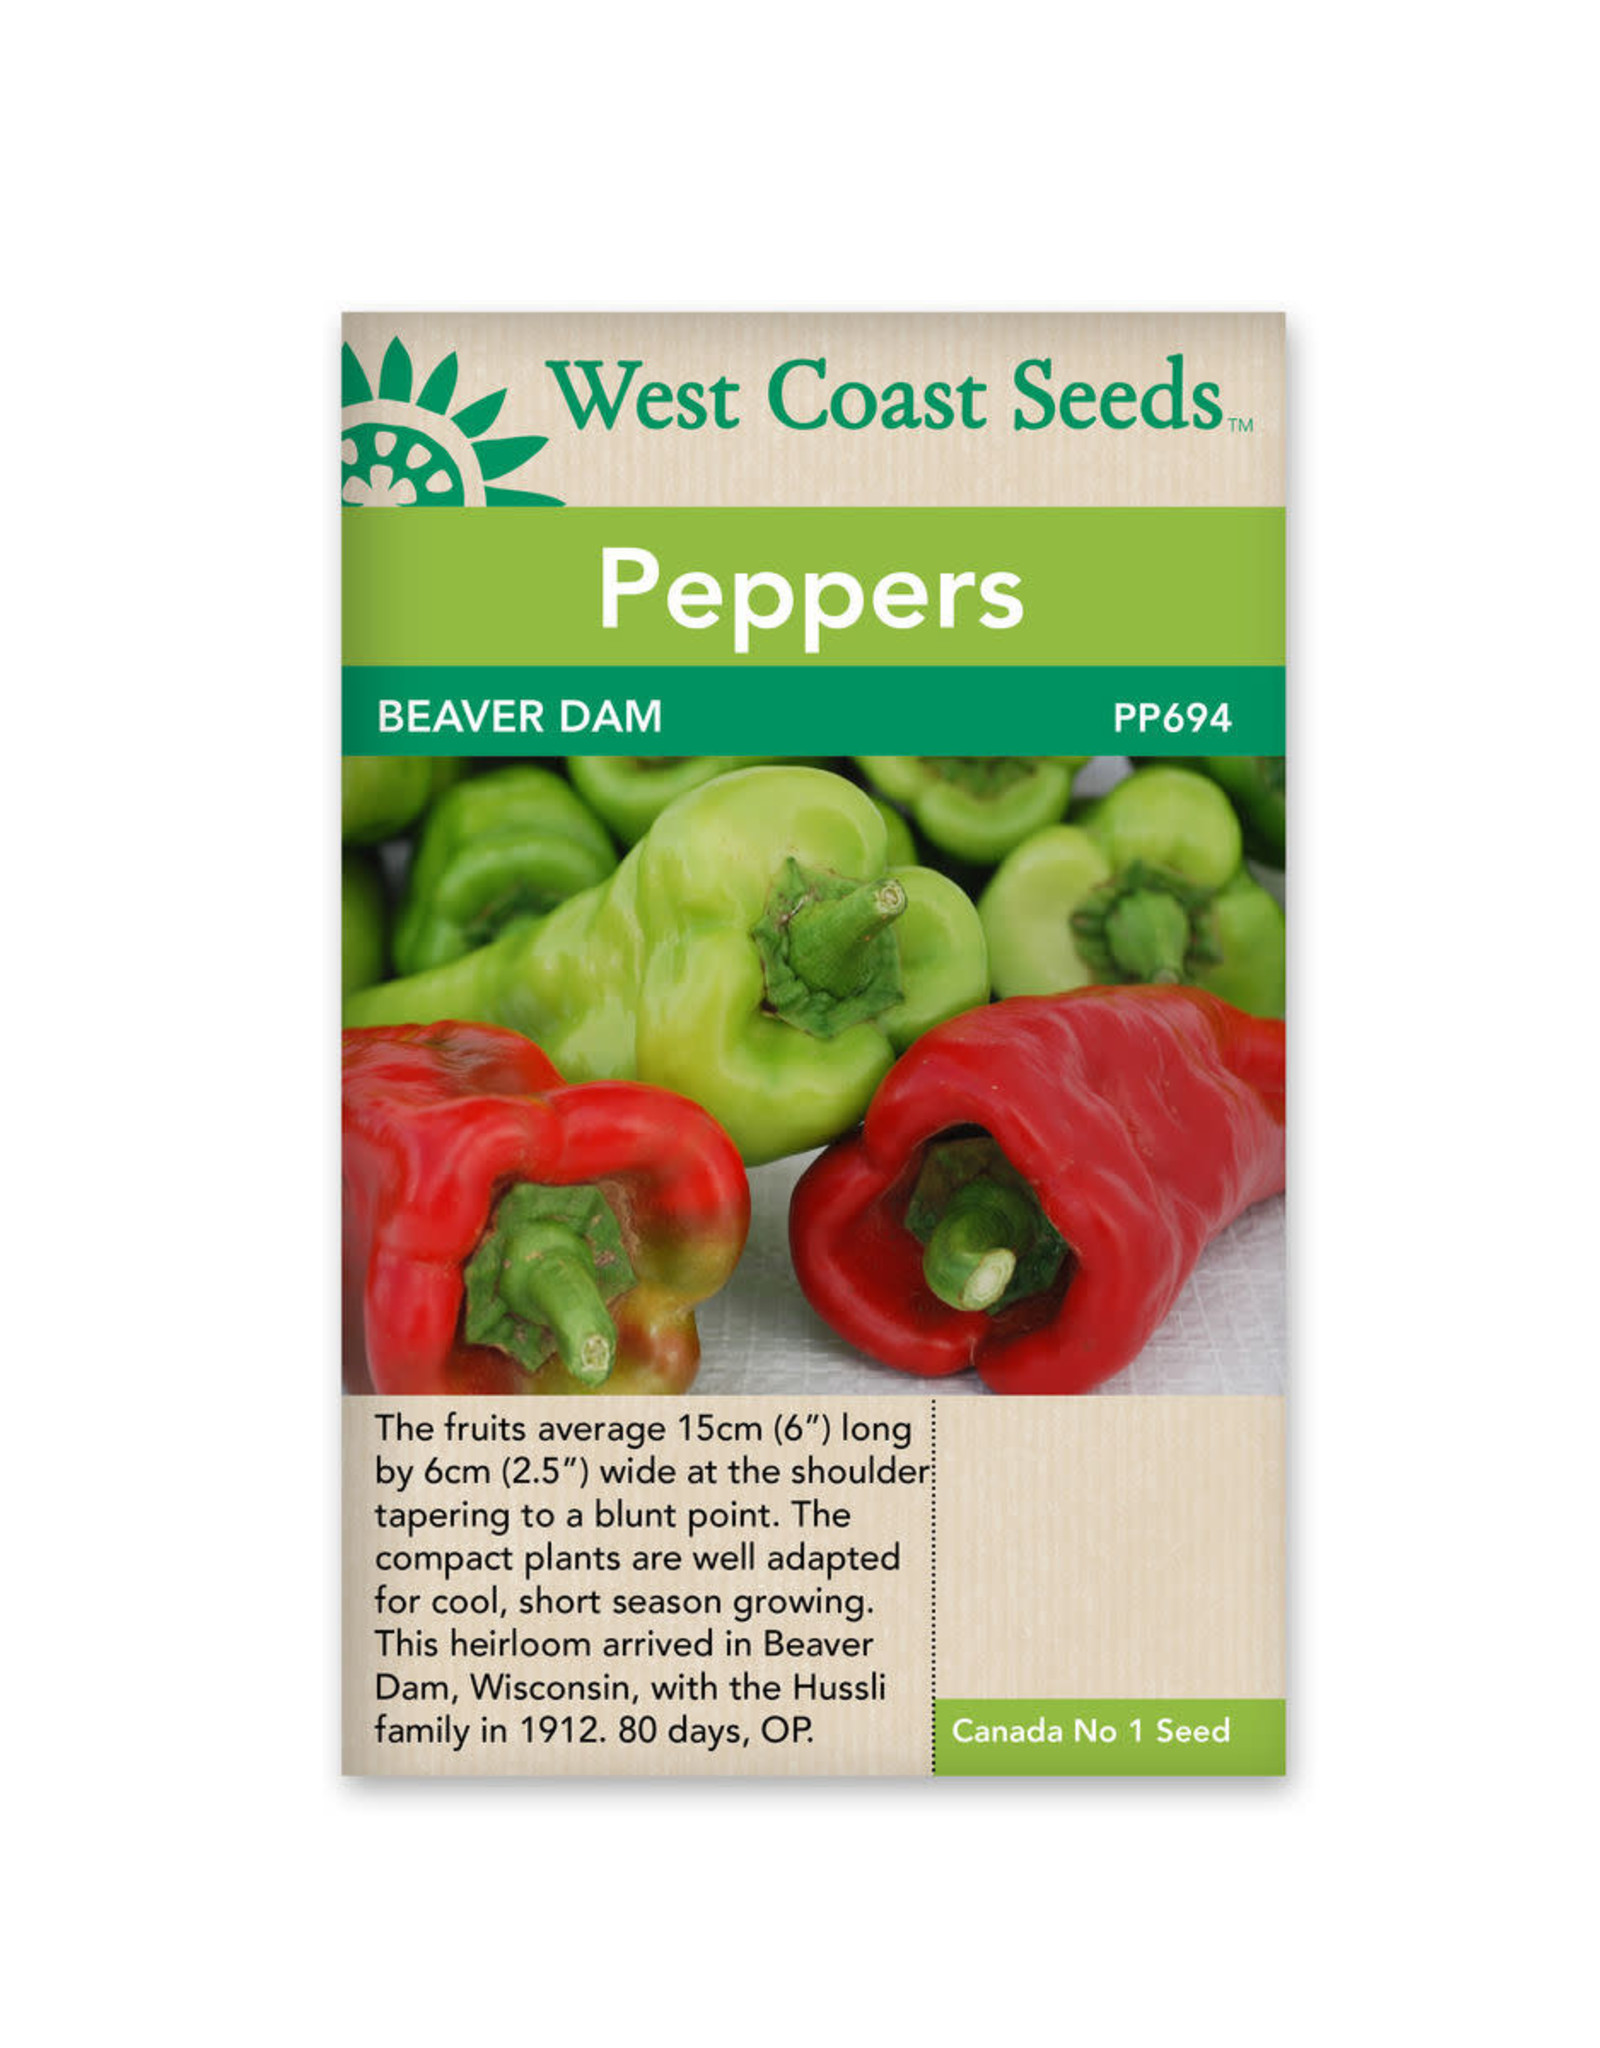 West Coast Seeds Peppers - Beaver Dam A